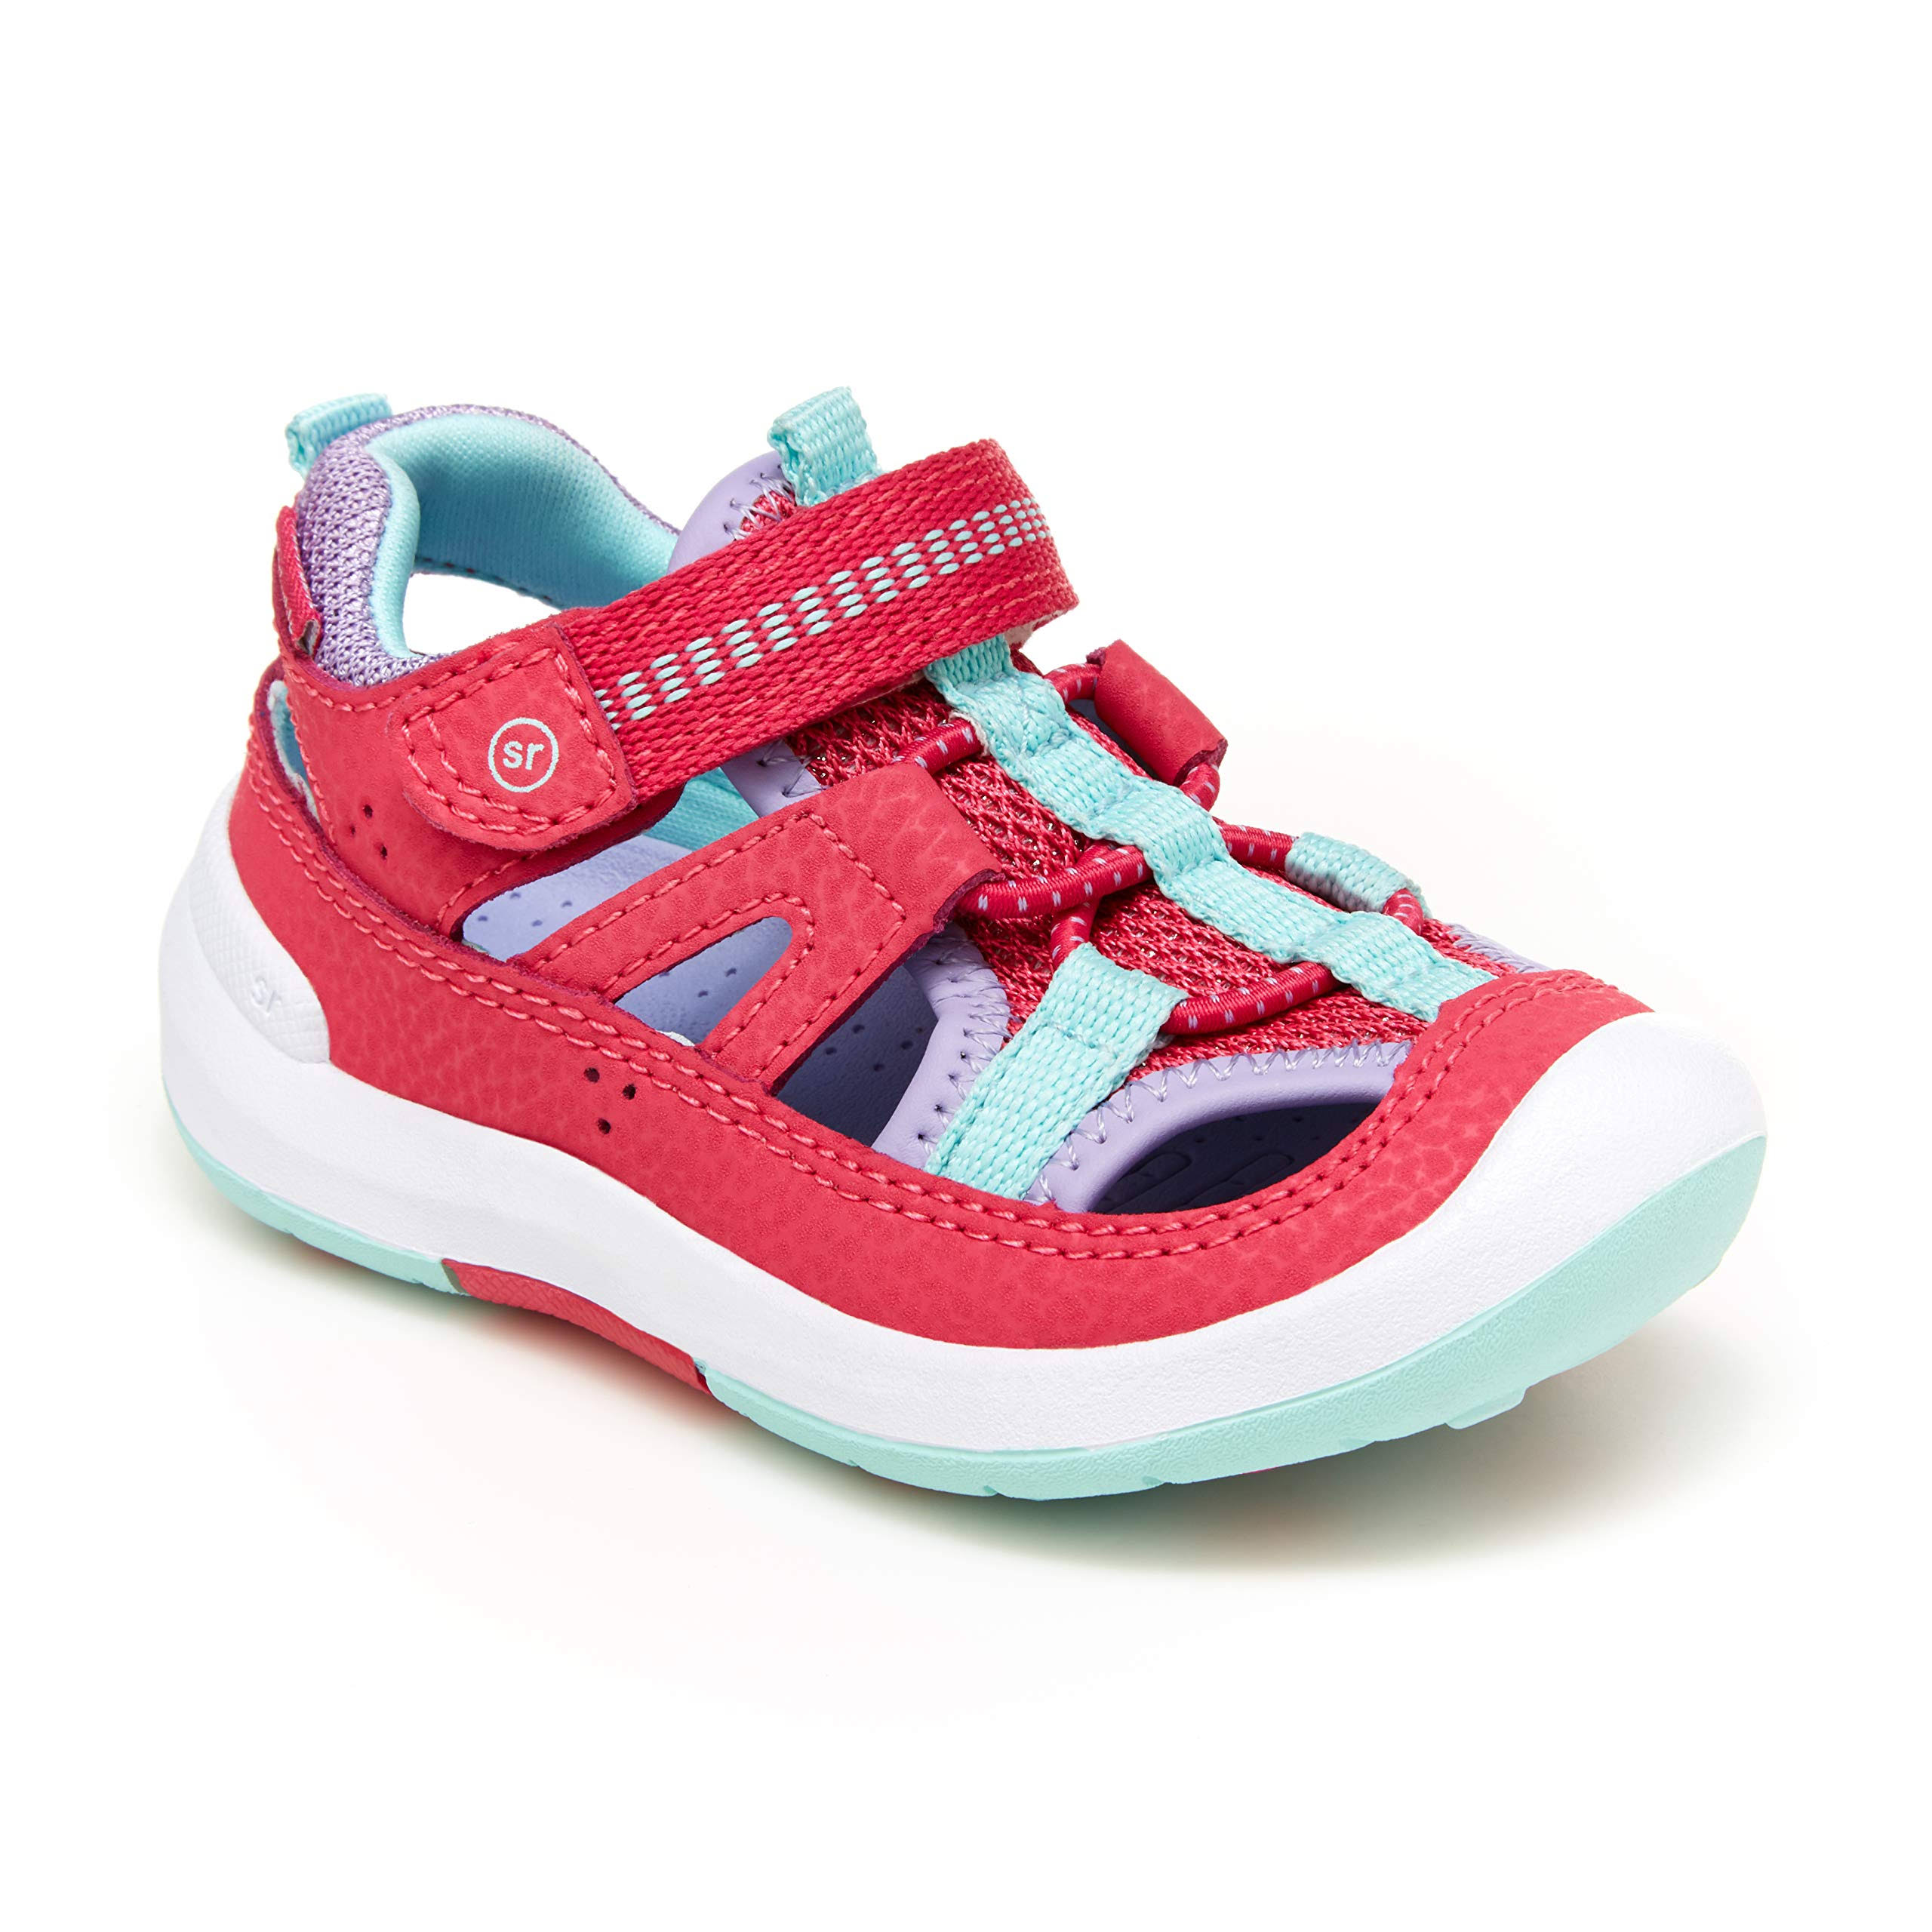 Stride Rite Wade Girls Toddler Sandals (Water Friendly) - Pink 6W Toddler Girls